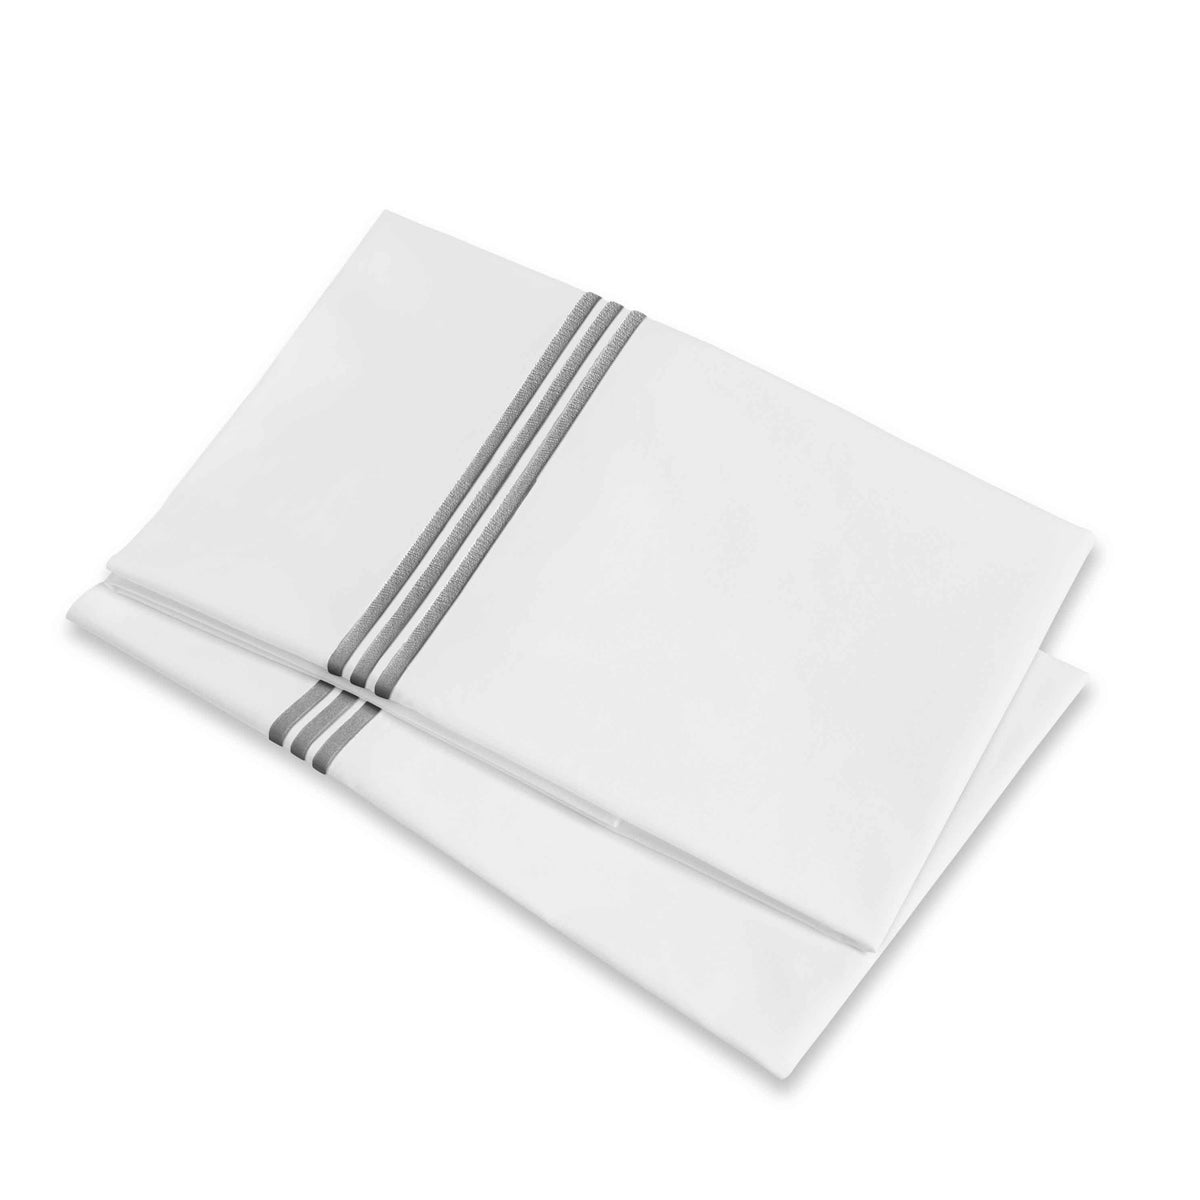 Folded Pillowcases of Signoria Platinum Percale Bedding in White/Lead Grey Color